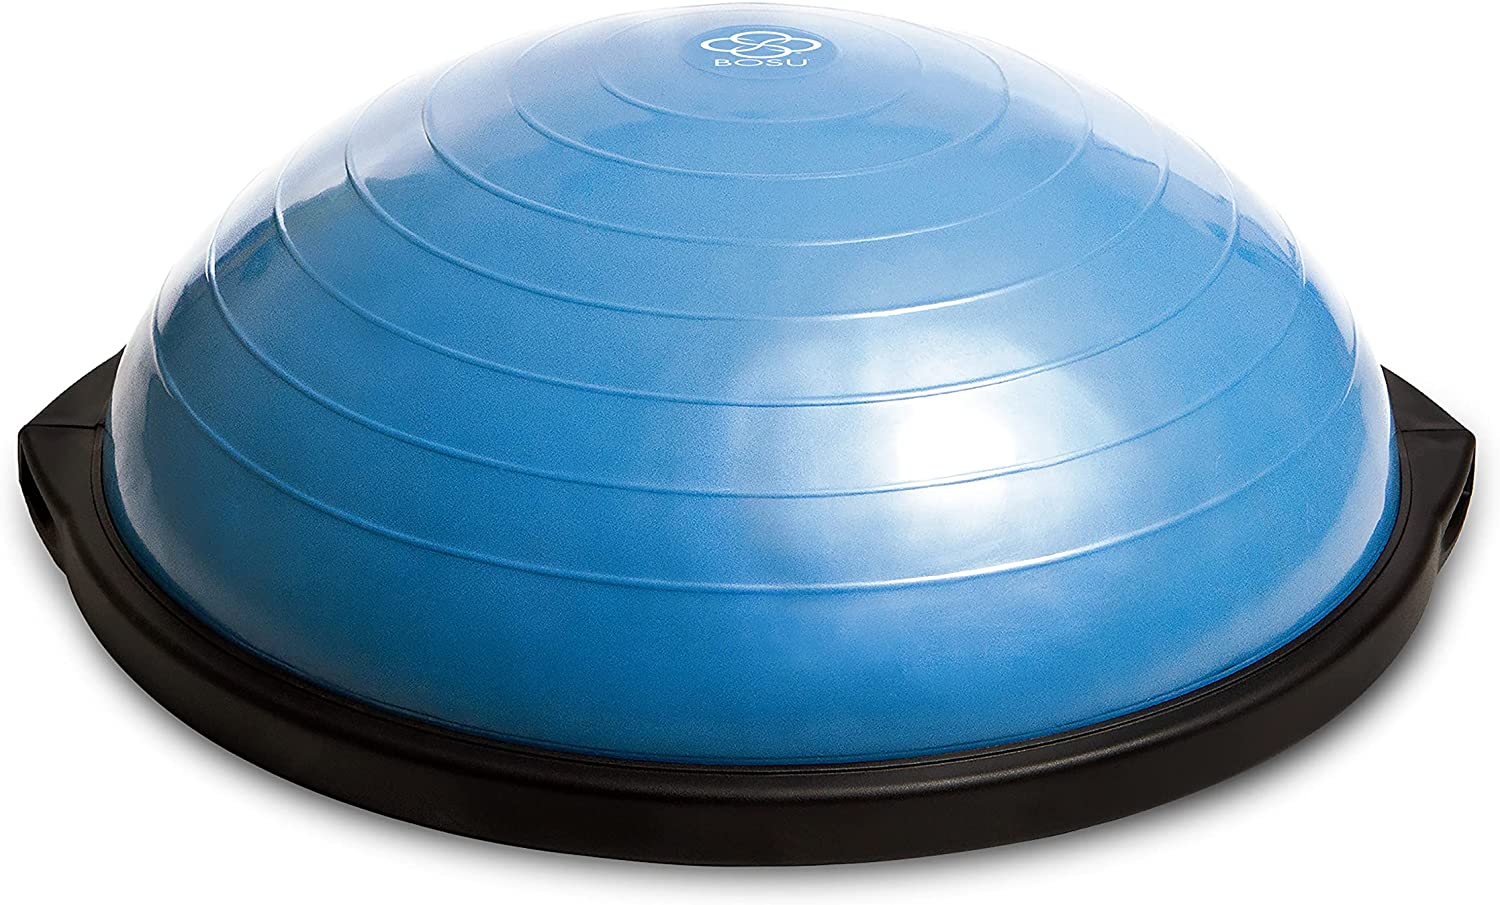 Bosu Ball, Home Use, Balance Trainer